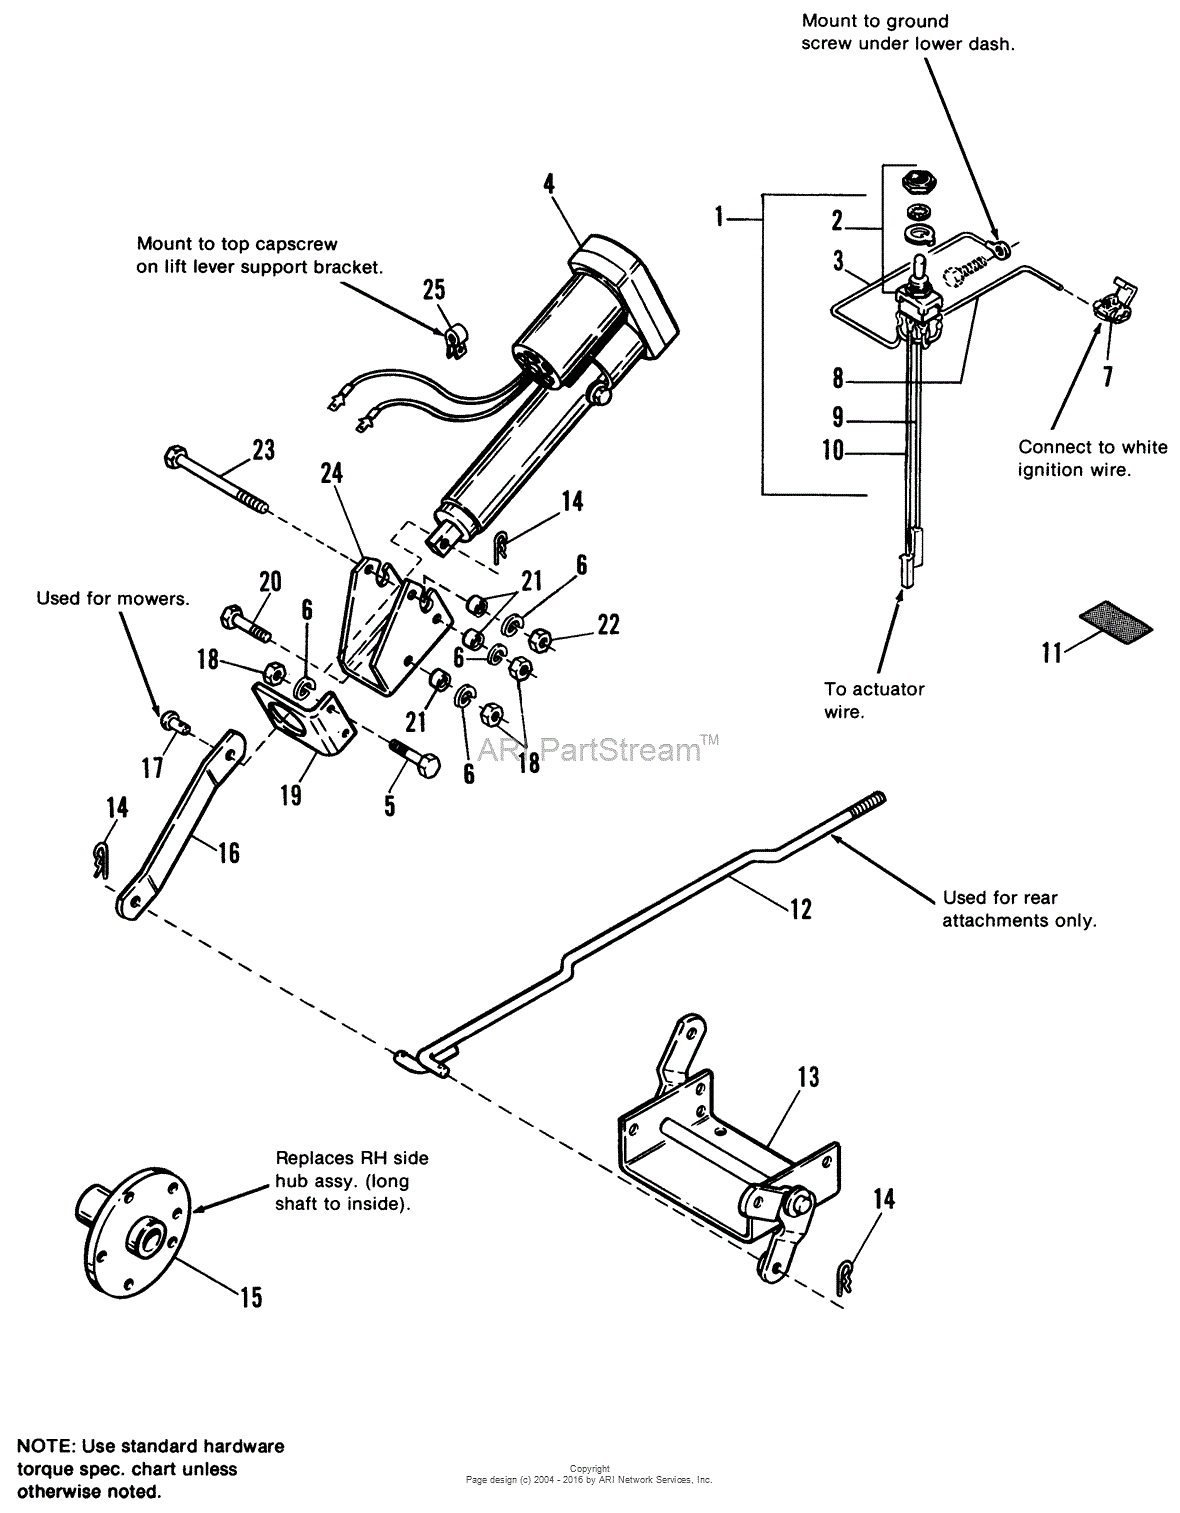 [DIAGRAM] Wiring Kit Diagram - MYDIAGRAM.ONLINE